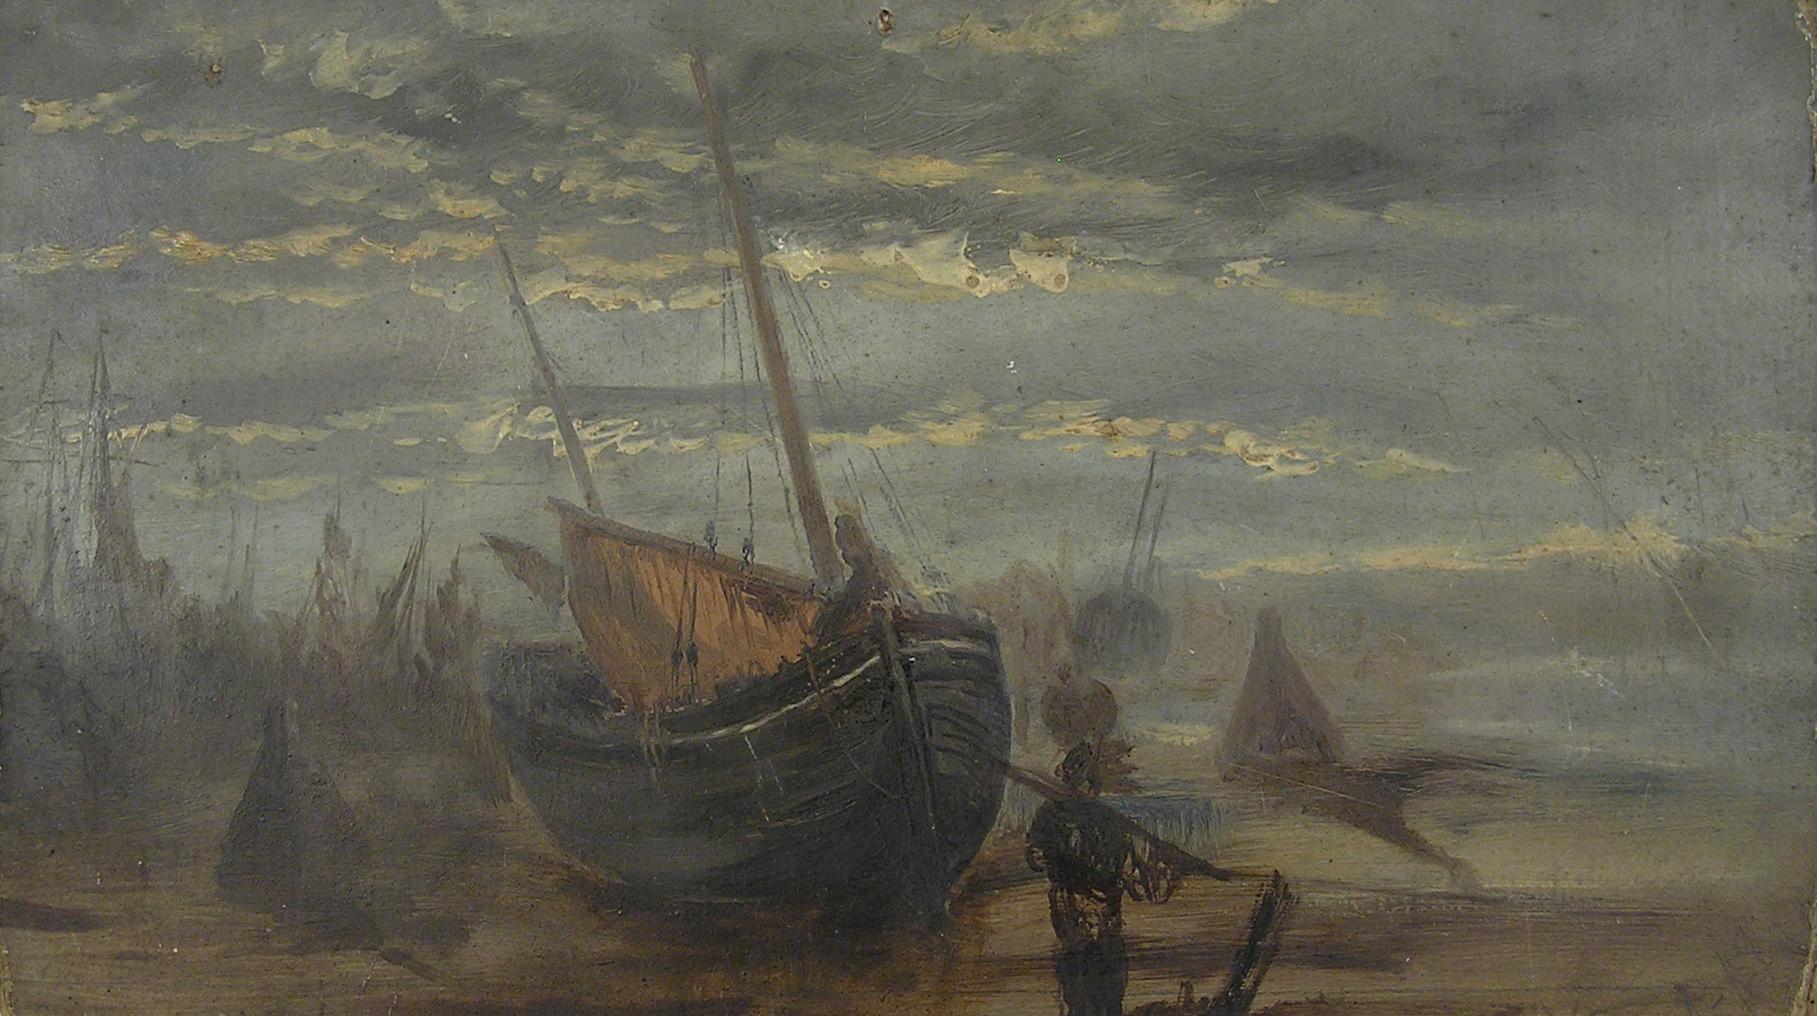  Ralph Reuben / Ruben Stubbs Landscape Painting - Ralph R. Stubbs - Low tide at Sunset - English 19th Century Marine Oil Painting